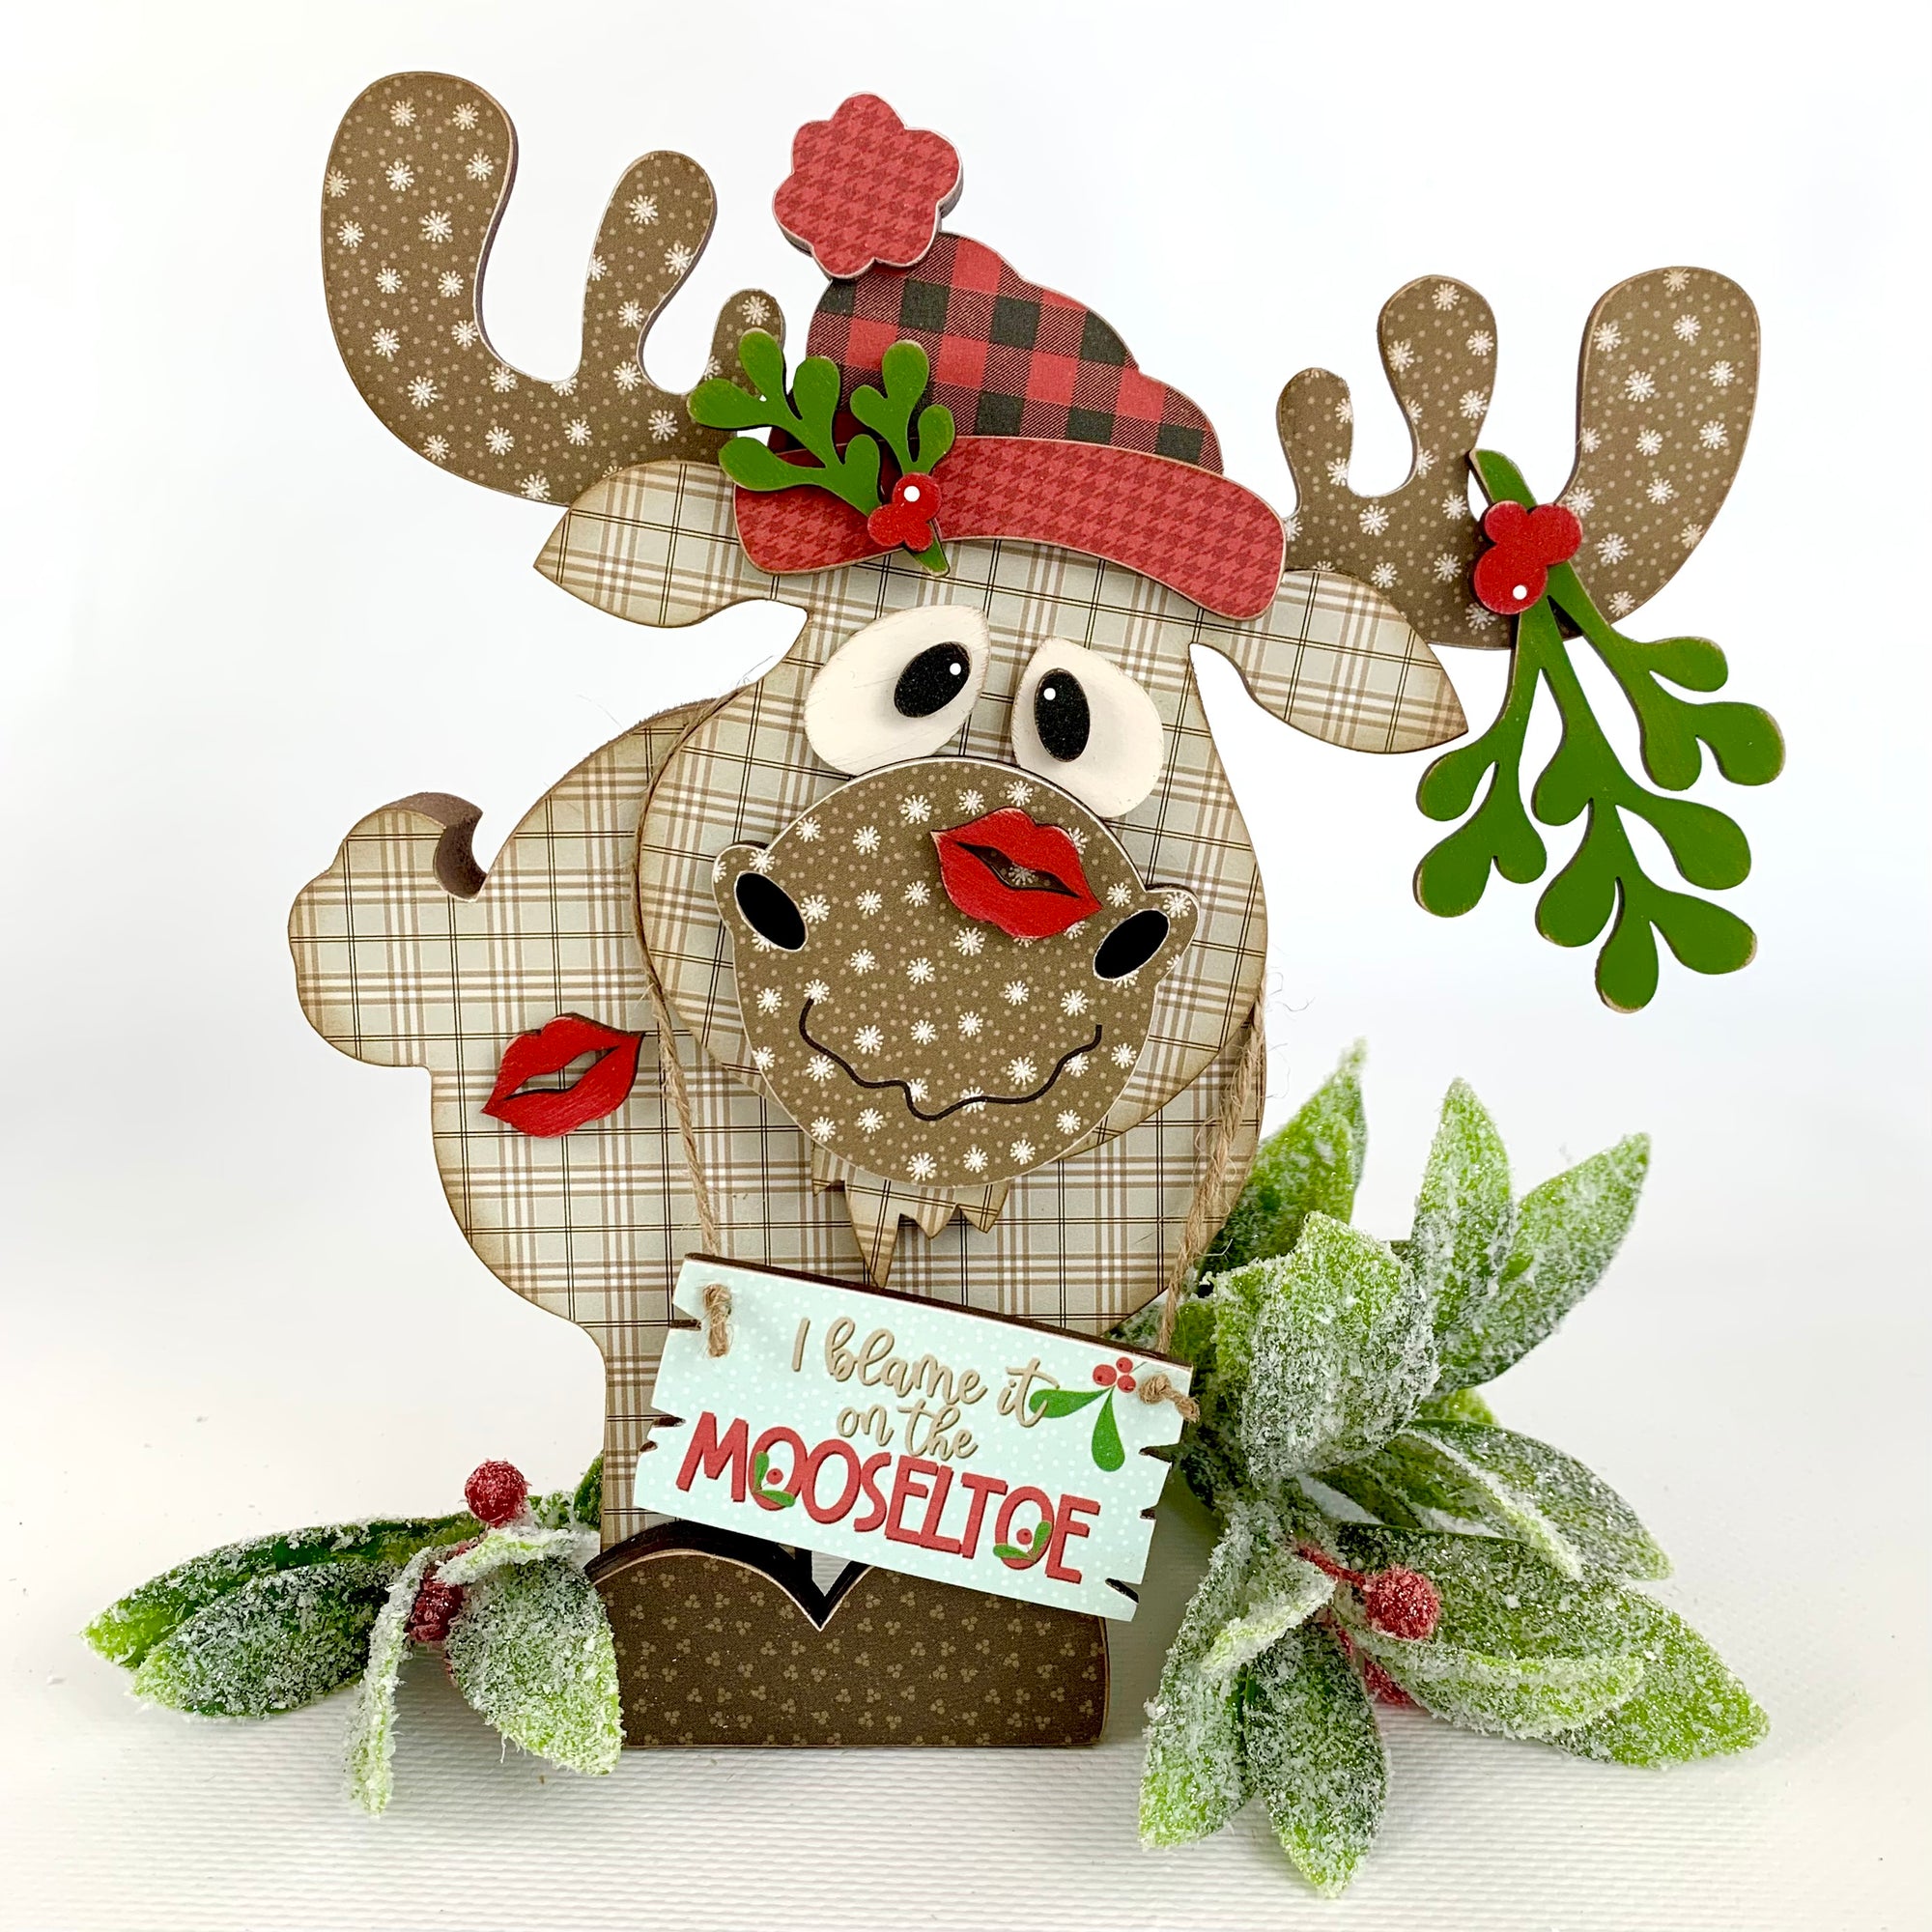 Christmas moose wood decor craft kit. Christmas moose with mistletoe on his antlers. Blame it on the Mooseltoe moose.